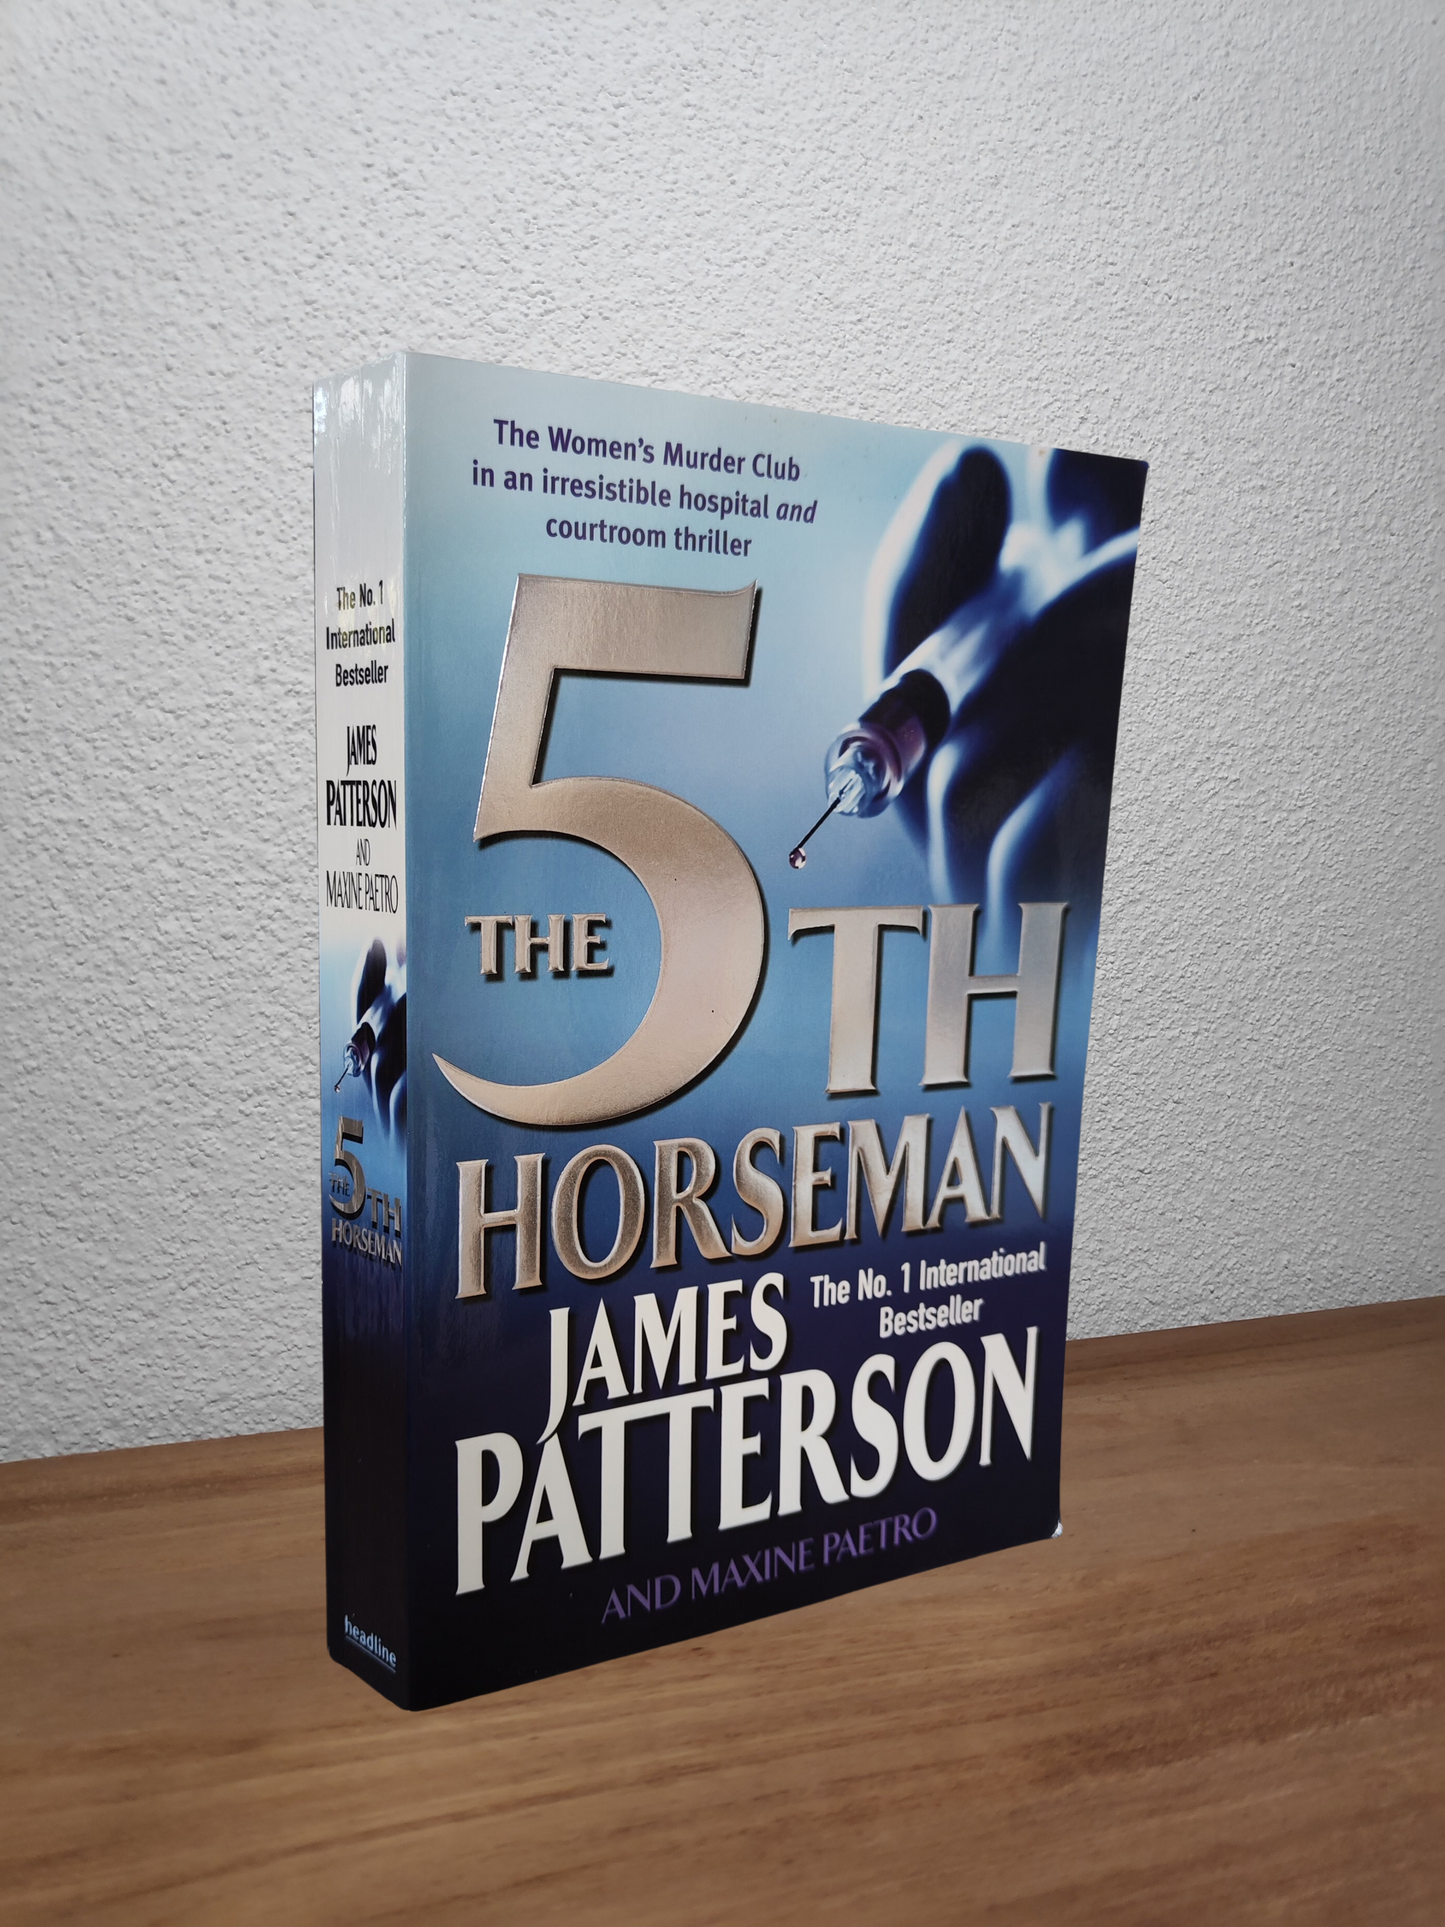 James Patterson & Maxine Paetro - The 5th Horseman (Women's Murder Club #5)